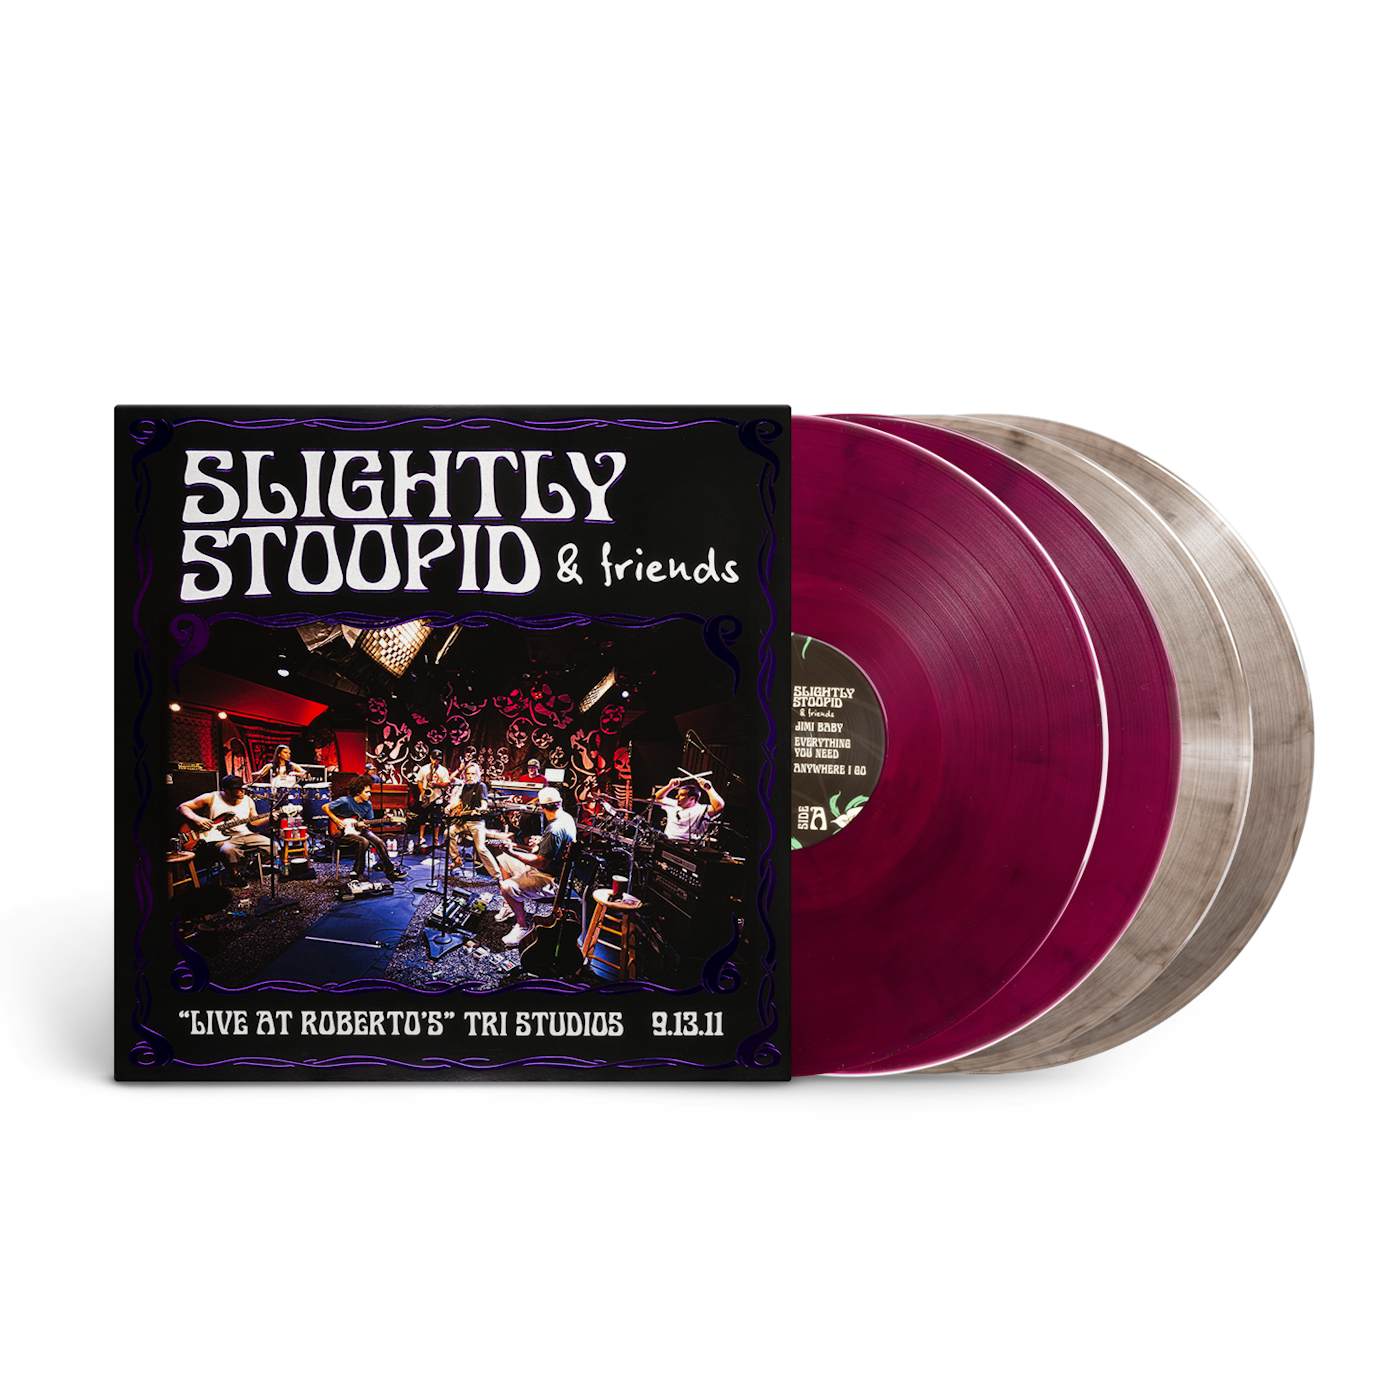 Slightly Stoopid & Friends "Live At Roberto's" TRI Studios 9.13.11 12" 140gram Vinyl in Deep Purple & Black Smoke